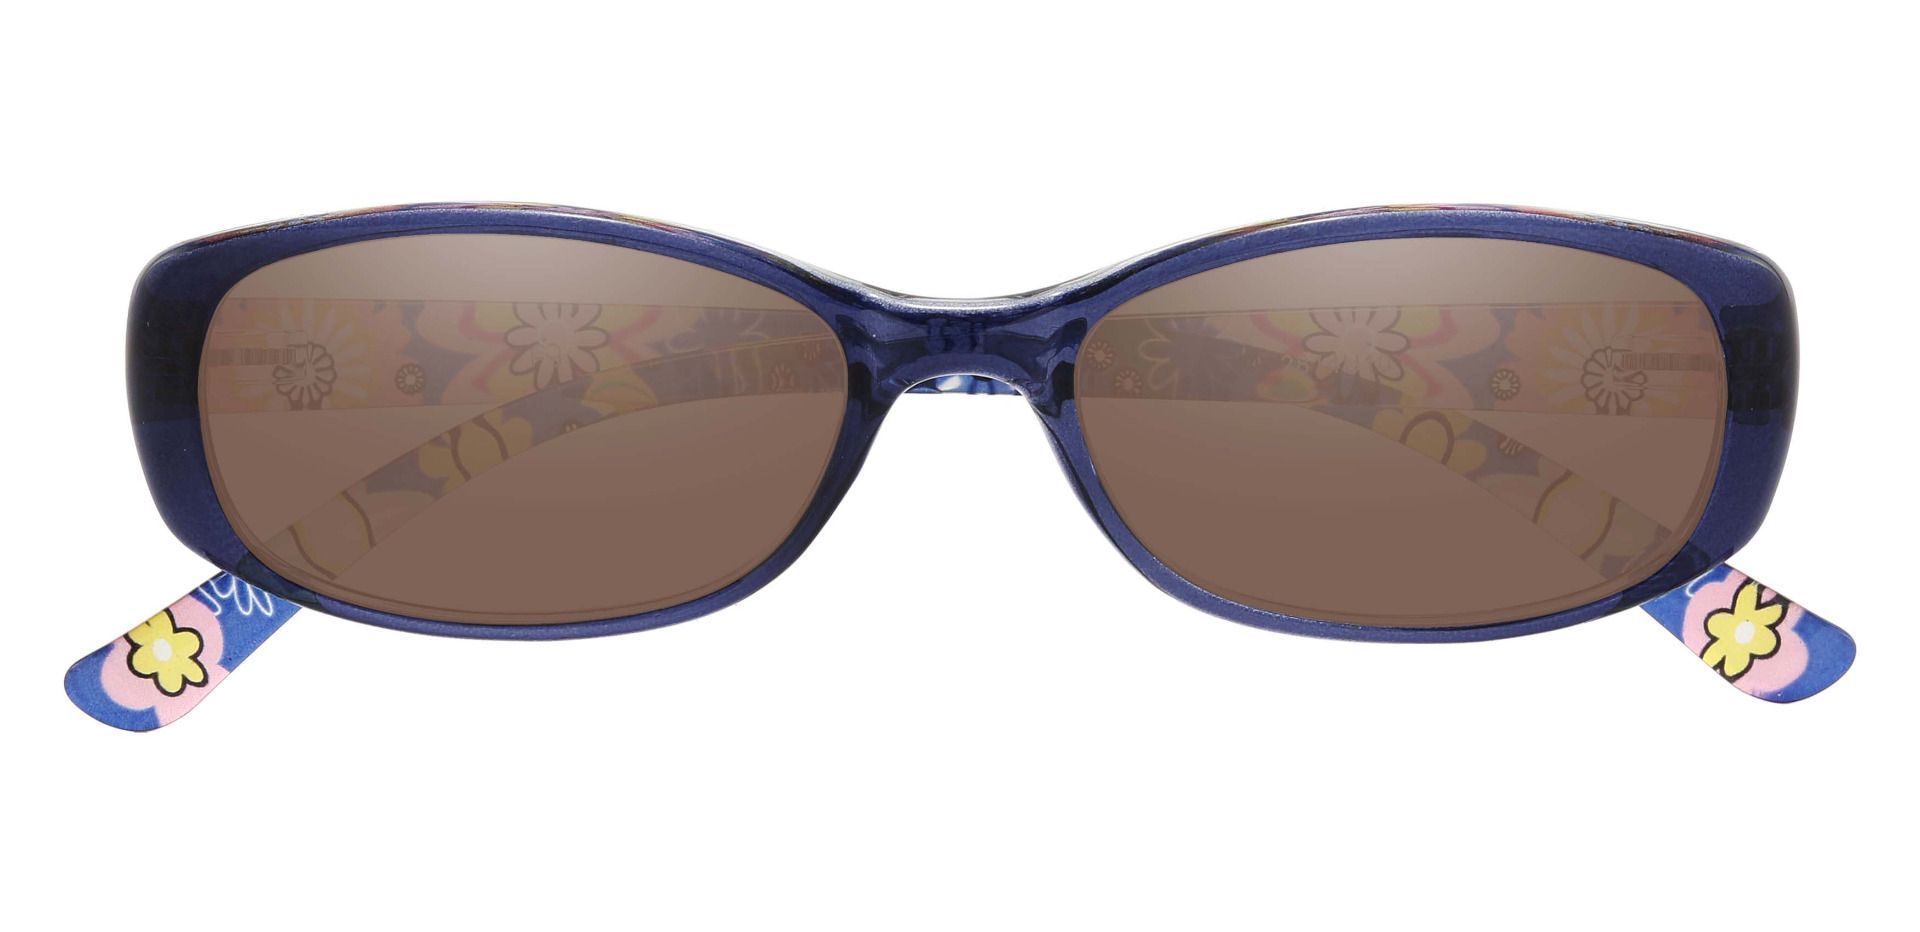 Bethesda Rectangle Prescription Sunglasses - Blue Frame With Brown Lenses